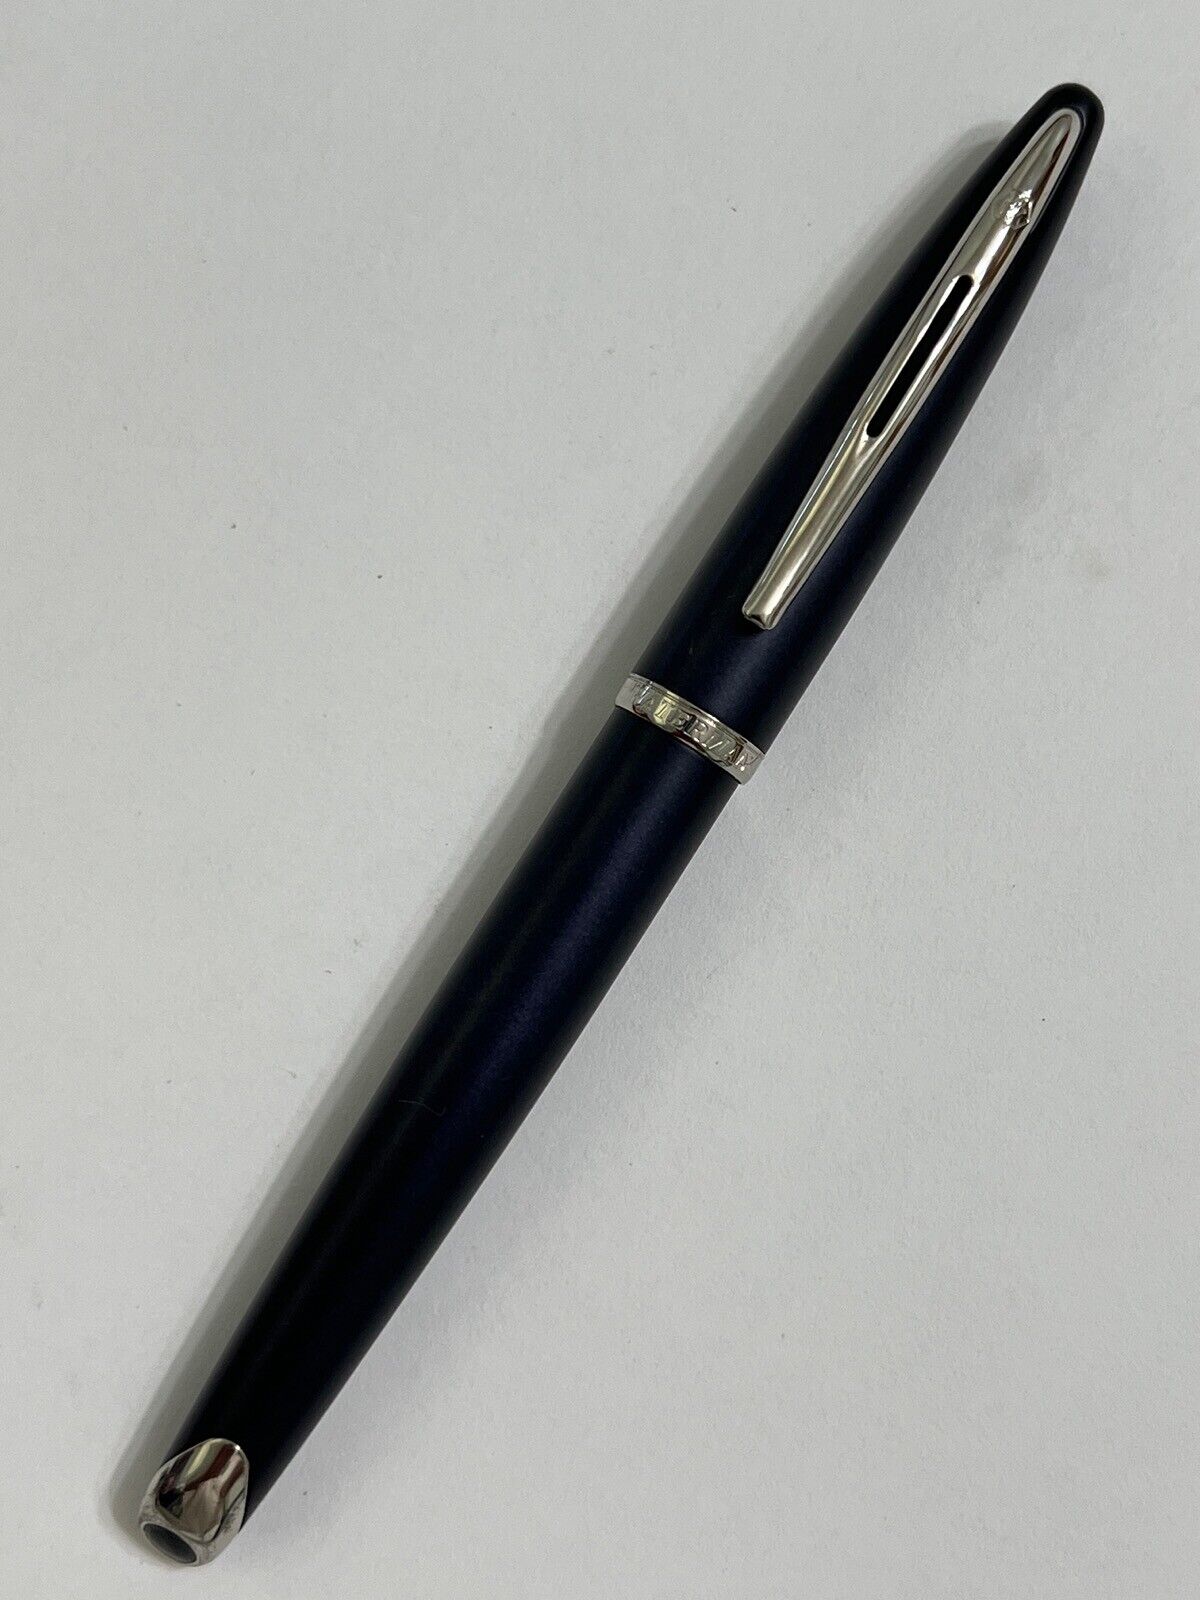 Waterman France Carene Dark Blue Lacquer Ballpoint Pen Needs refill